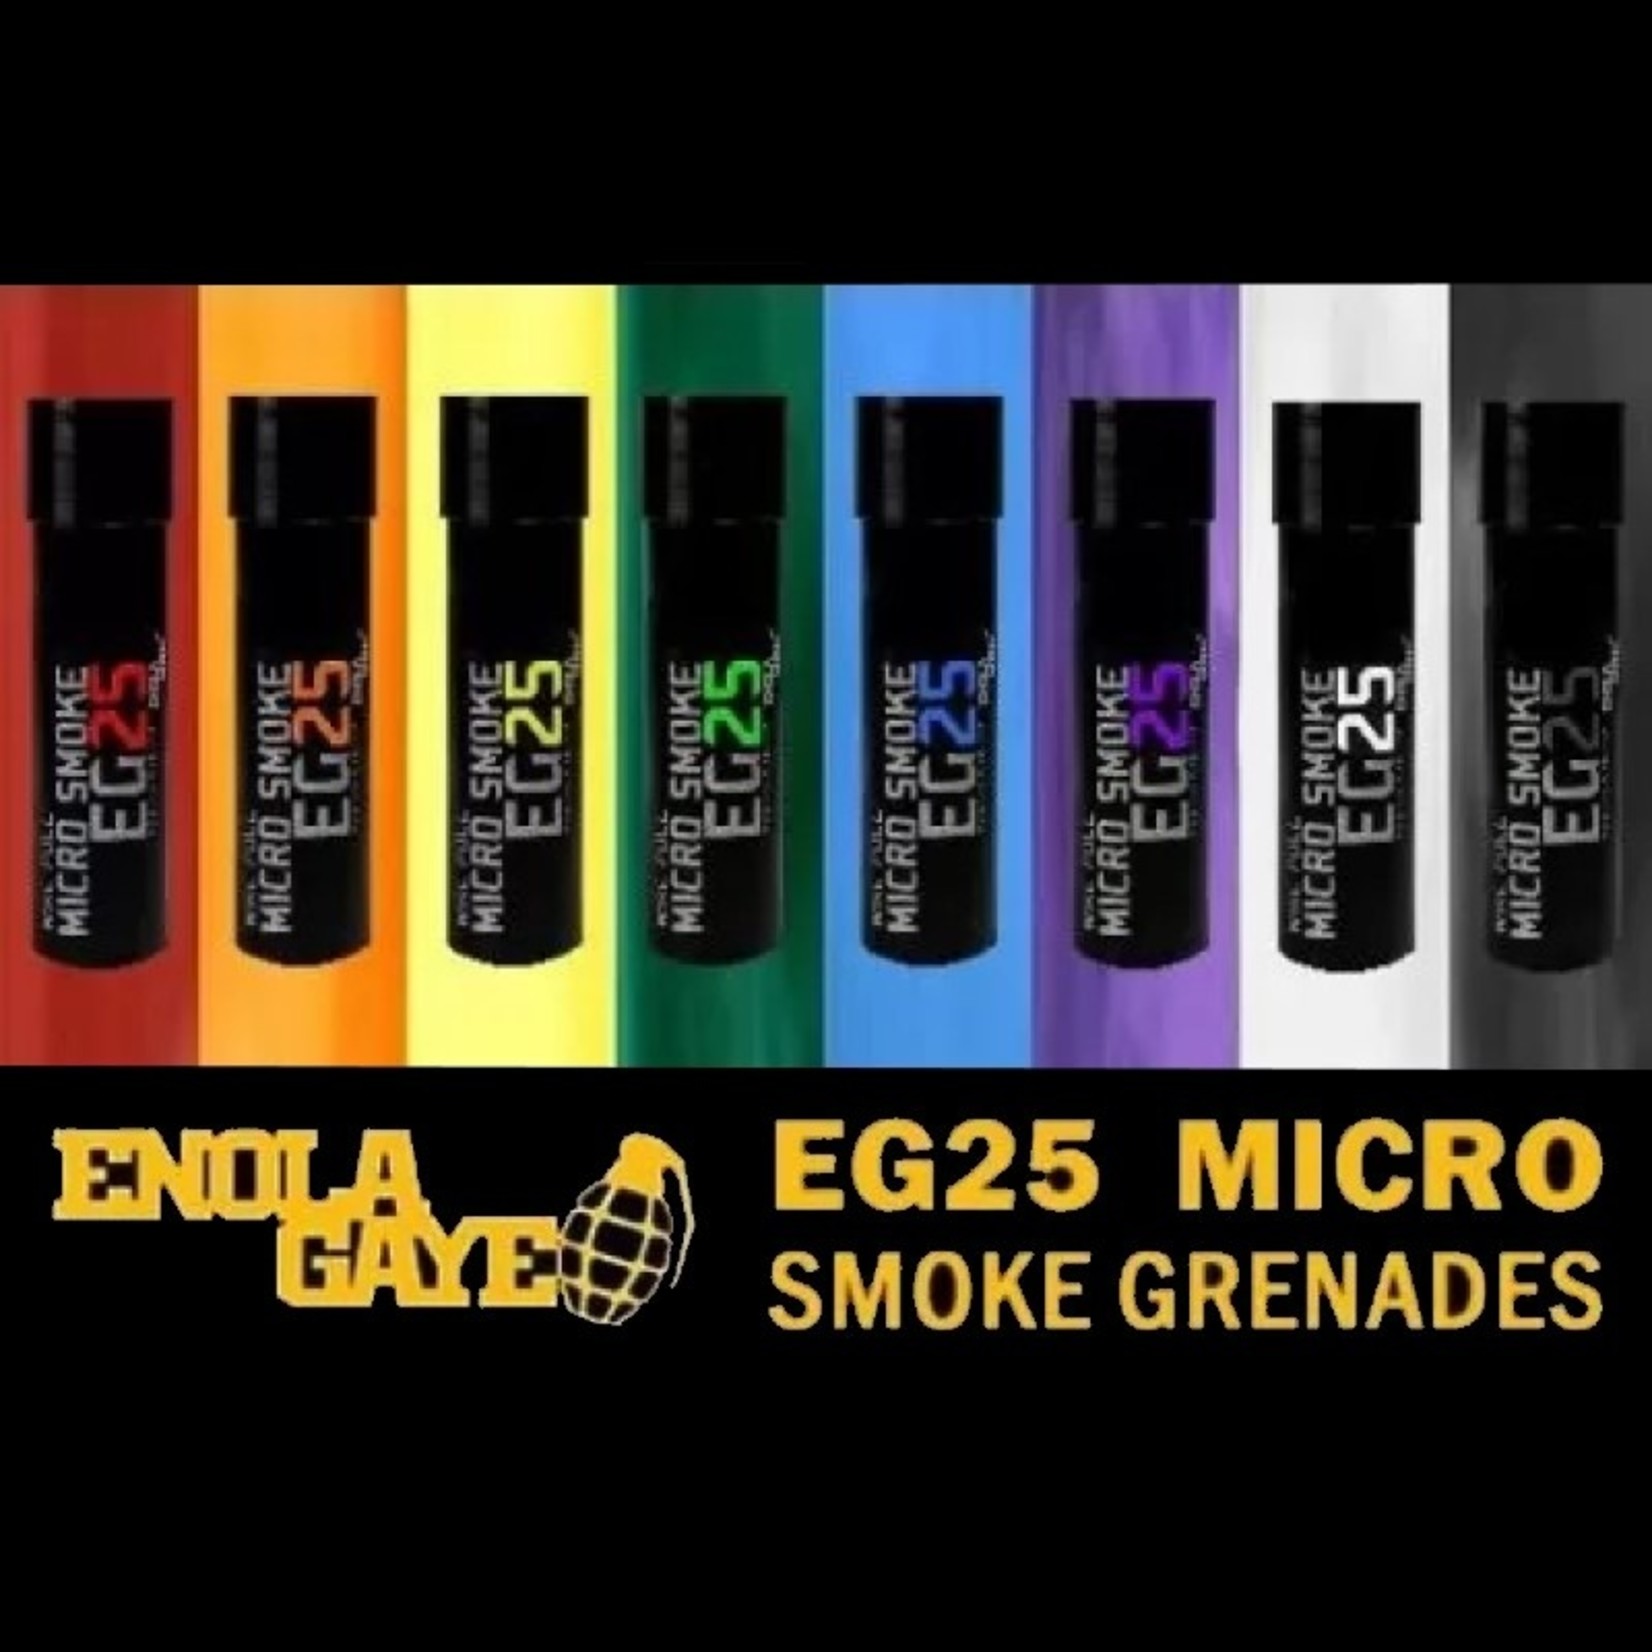 EG25 Micro Smoke